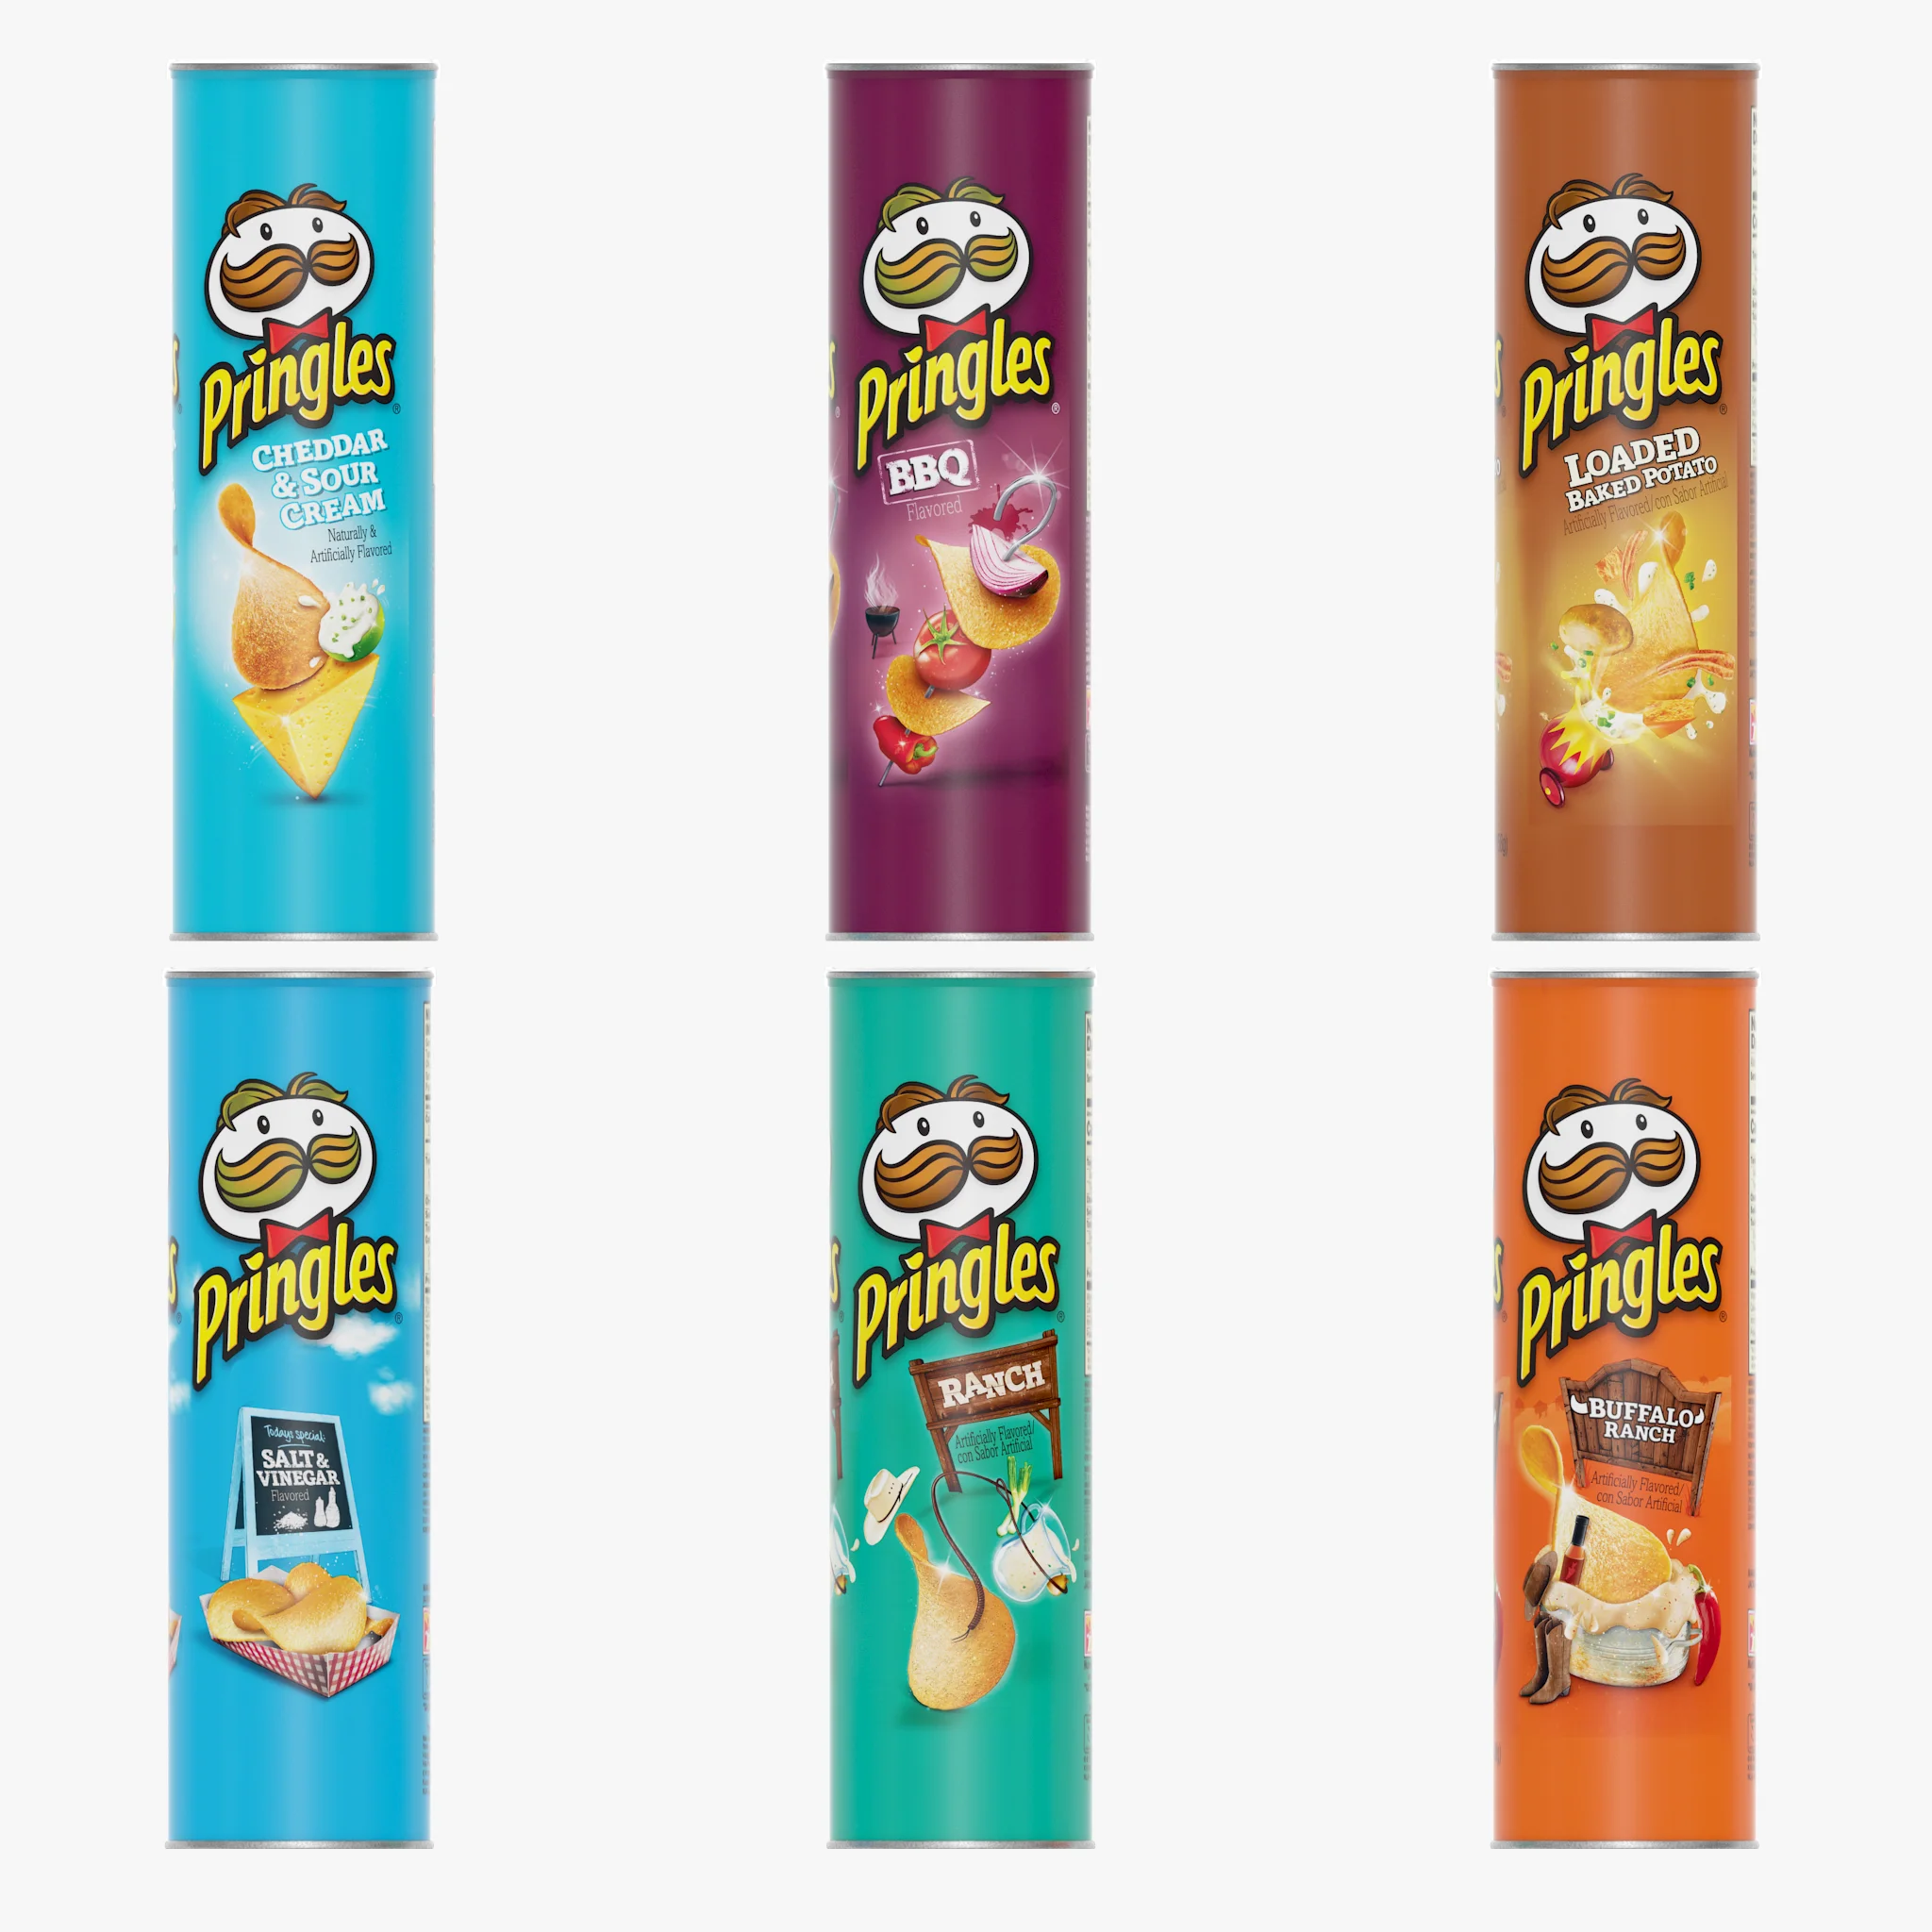 Wholesale PRINGLES 165g Potato Chips/Best Quality Pringles potato chips for sale worldwide